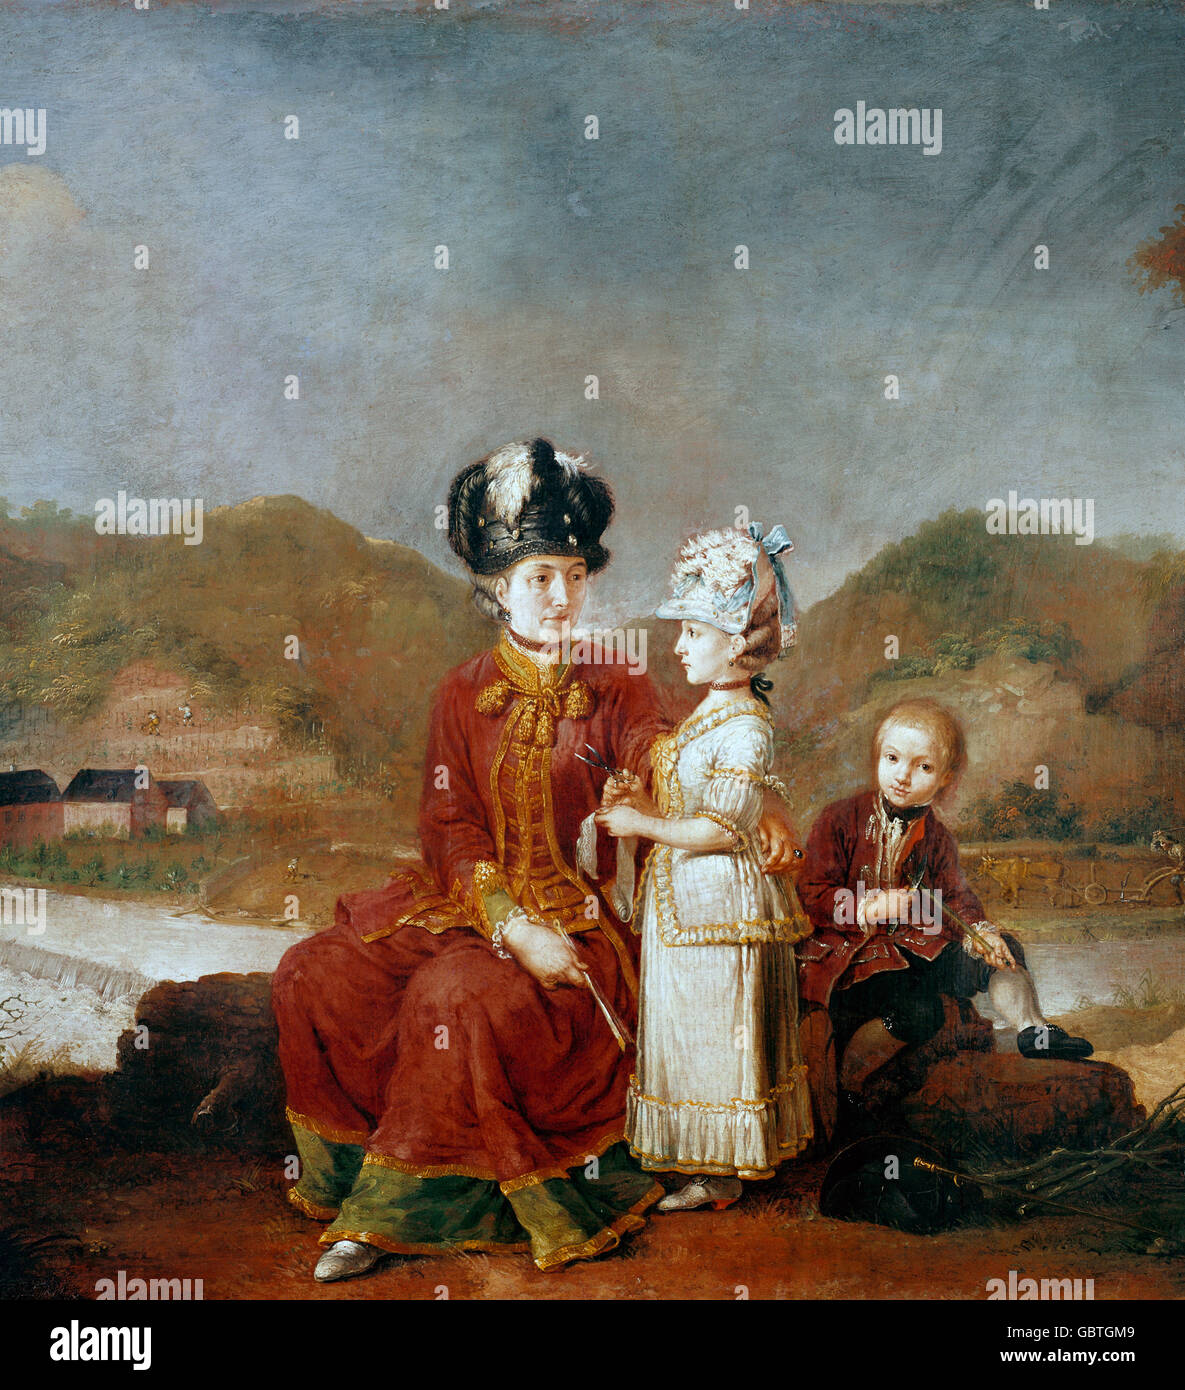 Bildende Kunst, Zick, Johann (1702-1762), Malerei, "Portrait of a Lady mit Kindern", 1771, Öl auf Leinwand, 97 x 83 cm Stockfoto